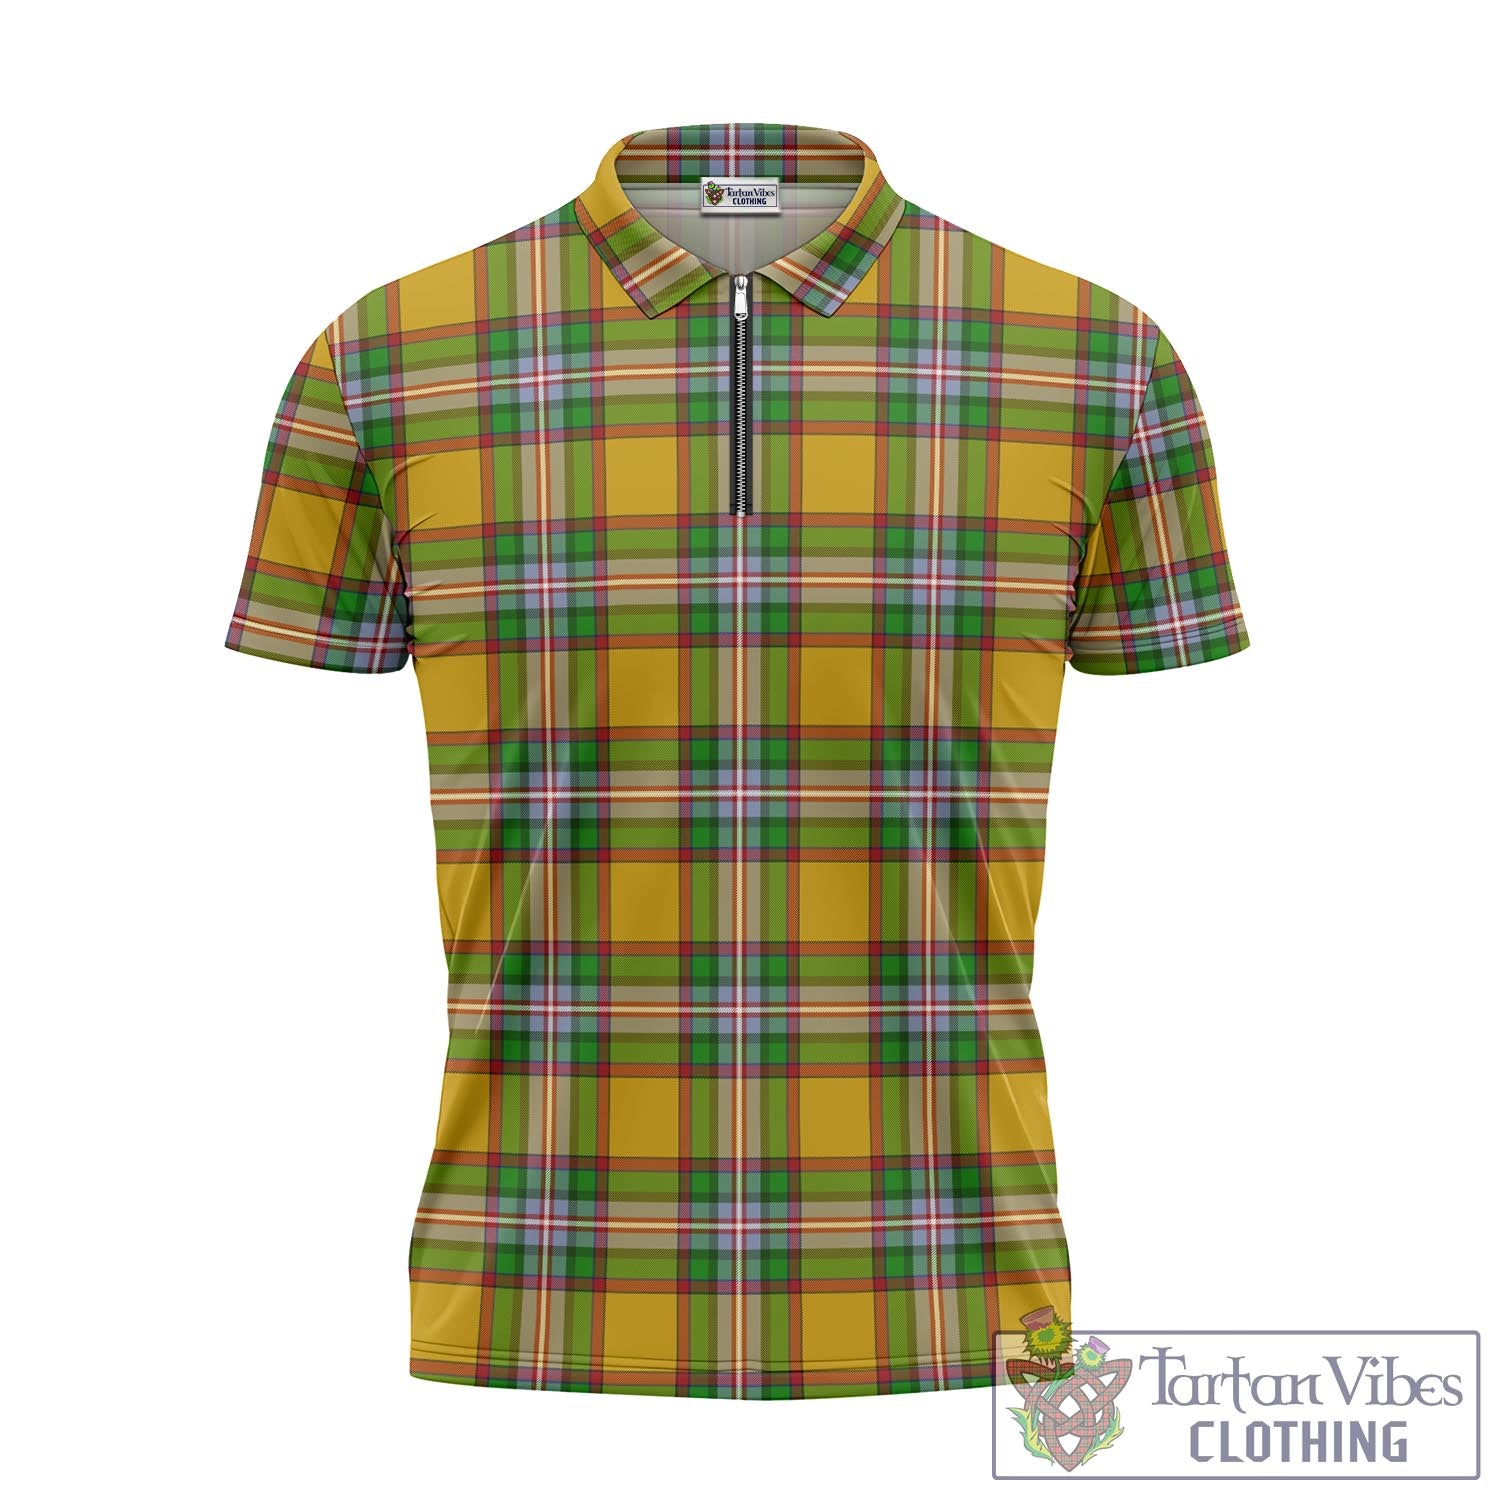 Tartan Vibes Clothing Essex County Canada Tartan Zipper Polo Shirt